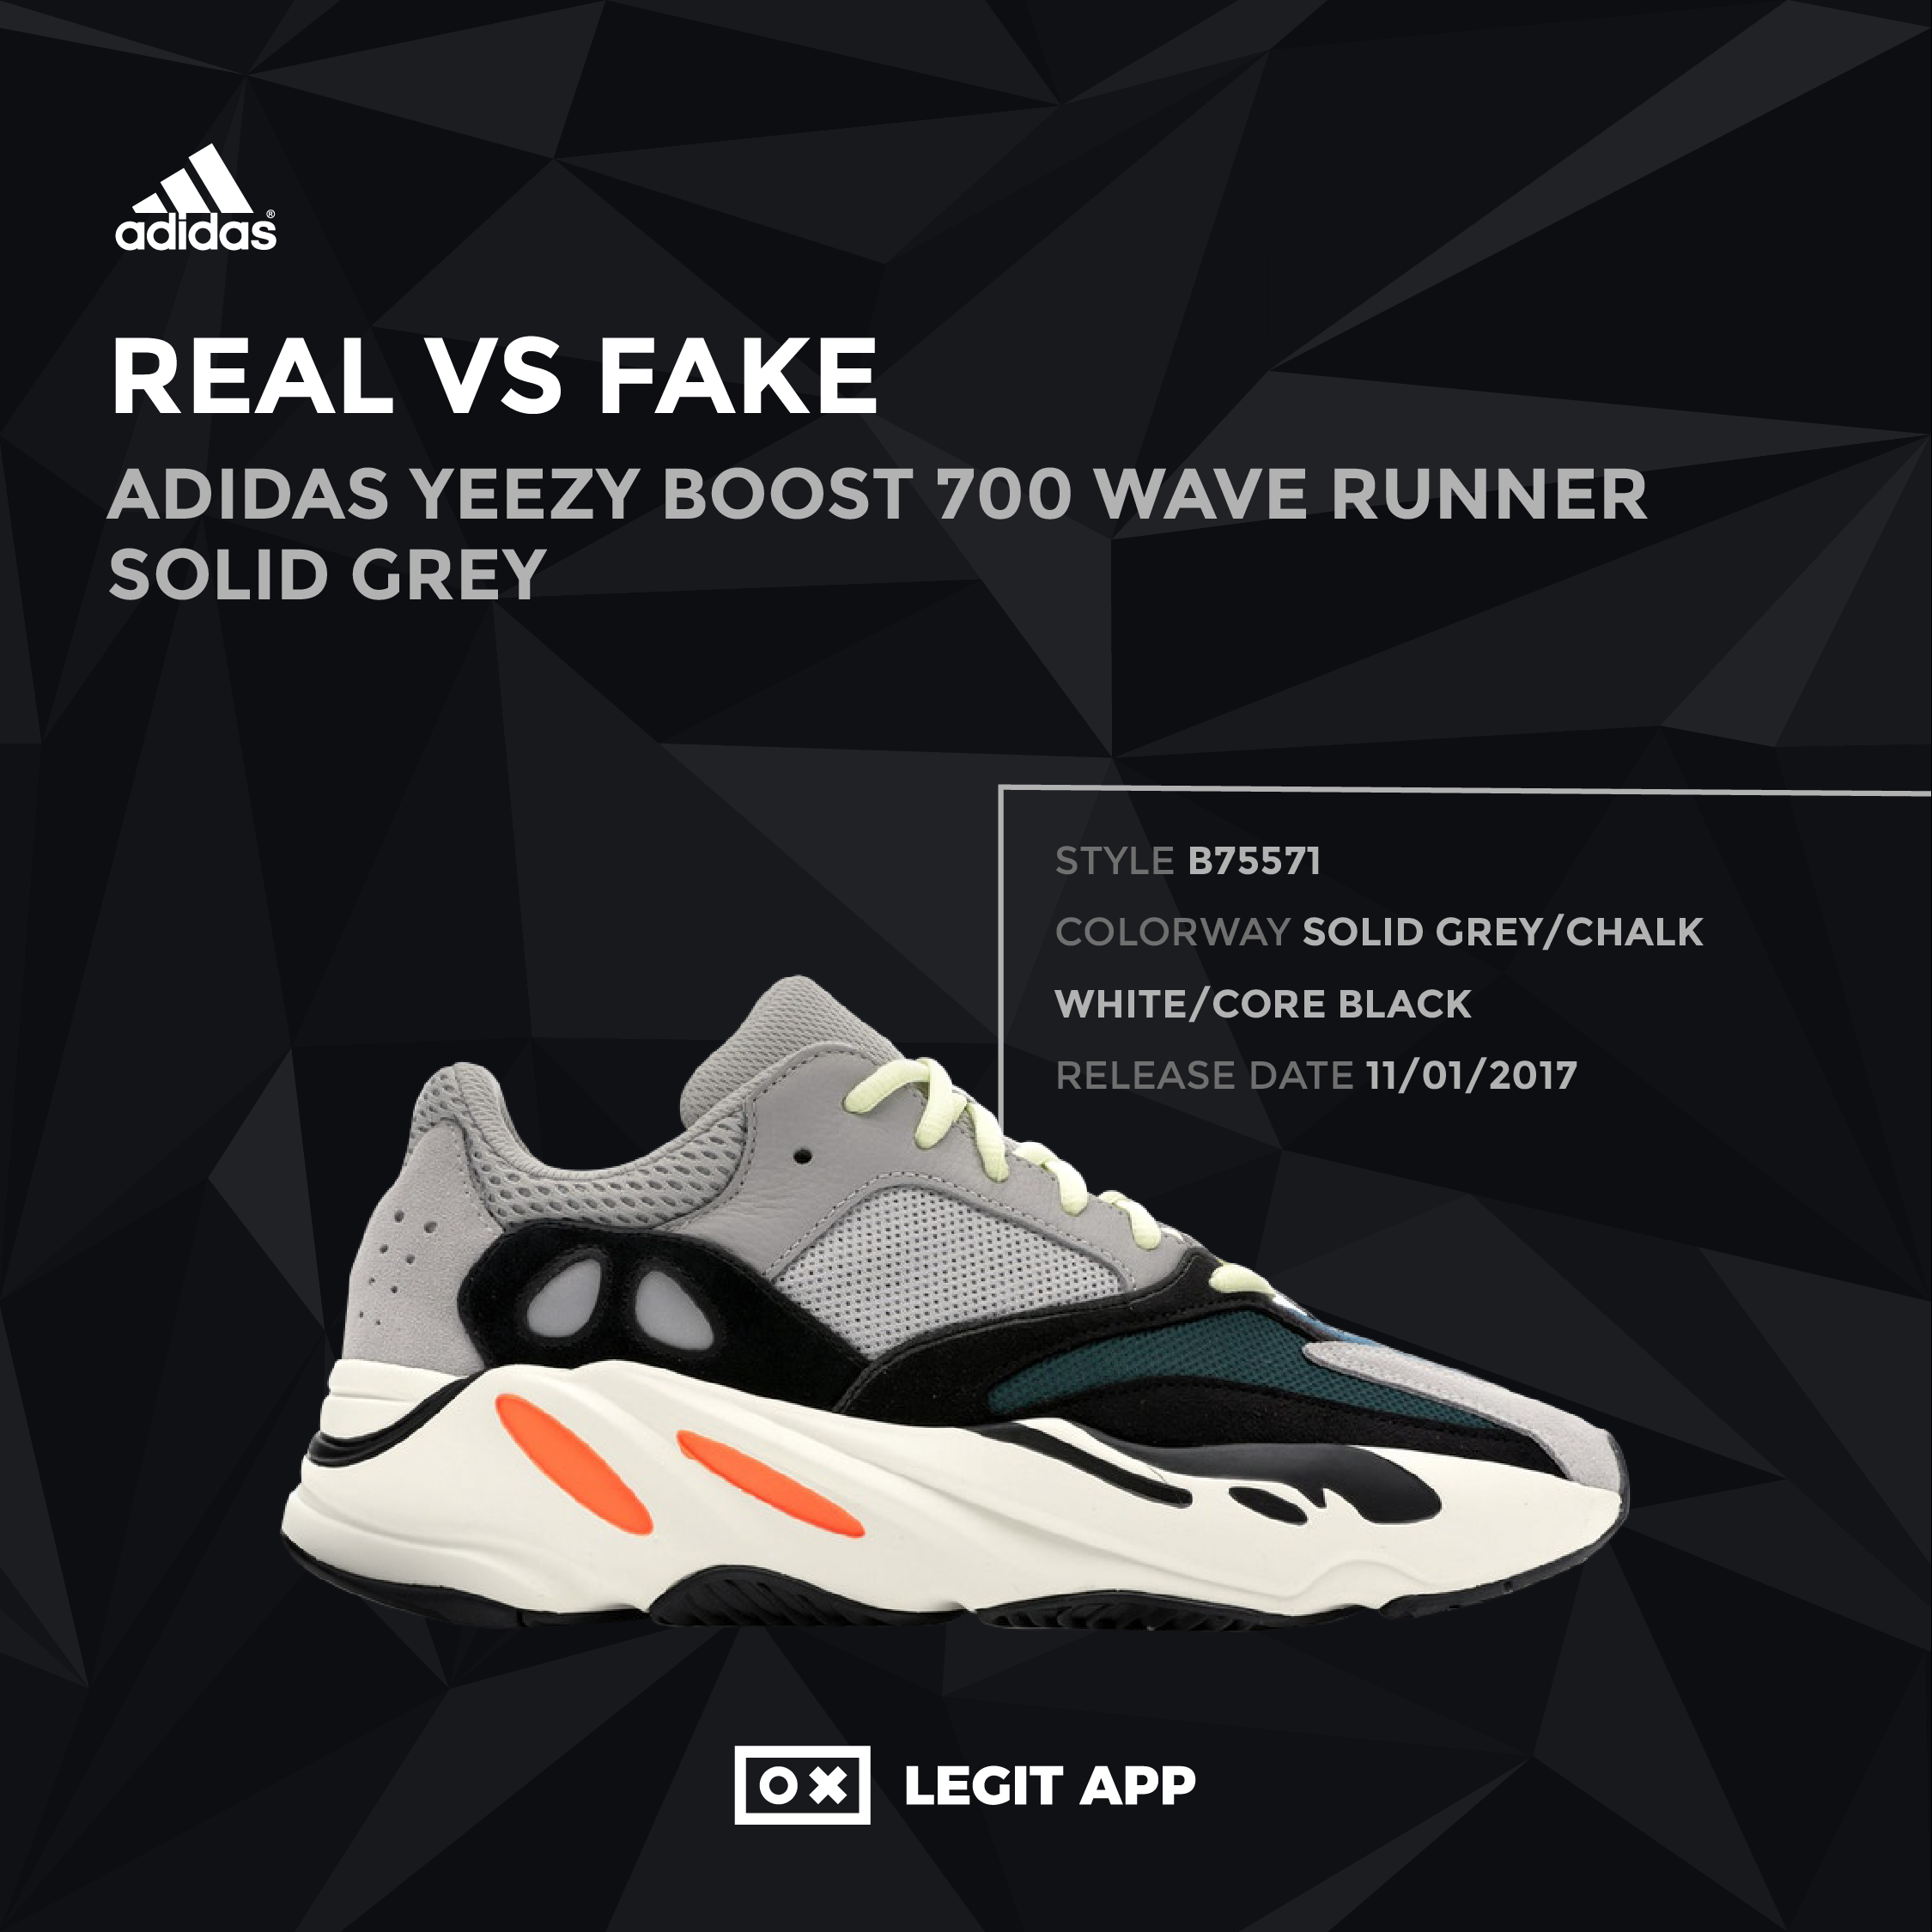 yeezy 700 wave runner real vs fake